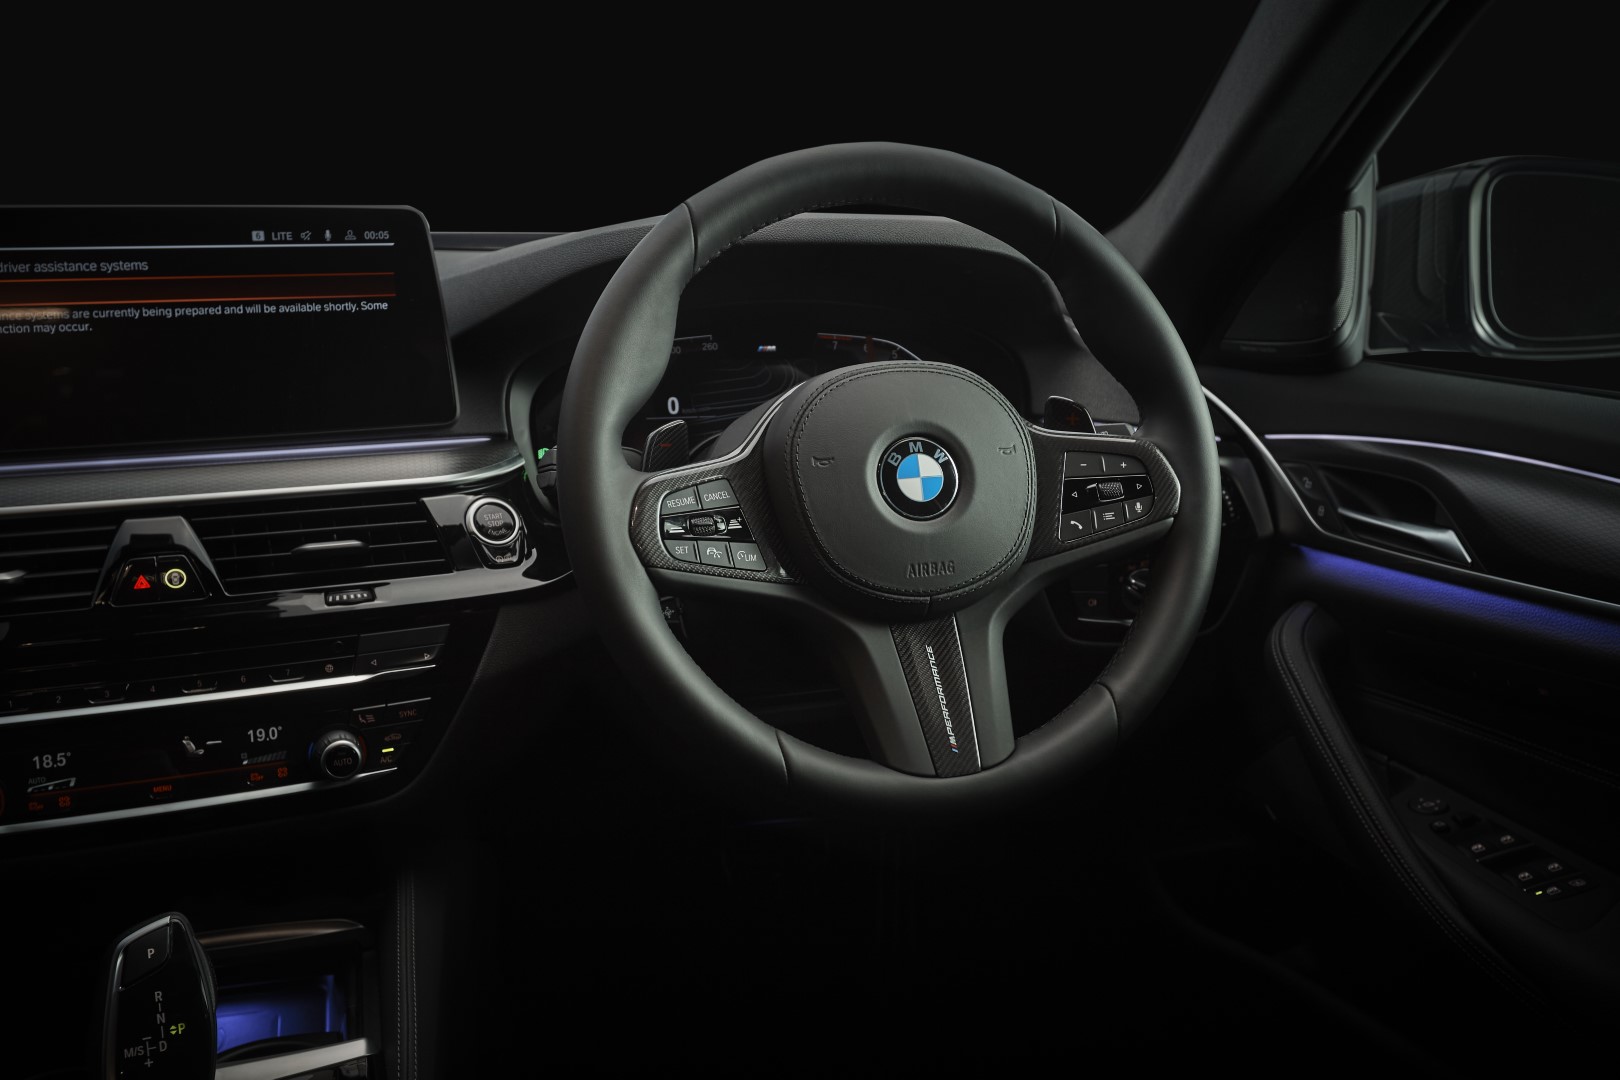 BMW 5 Series M Performance